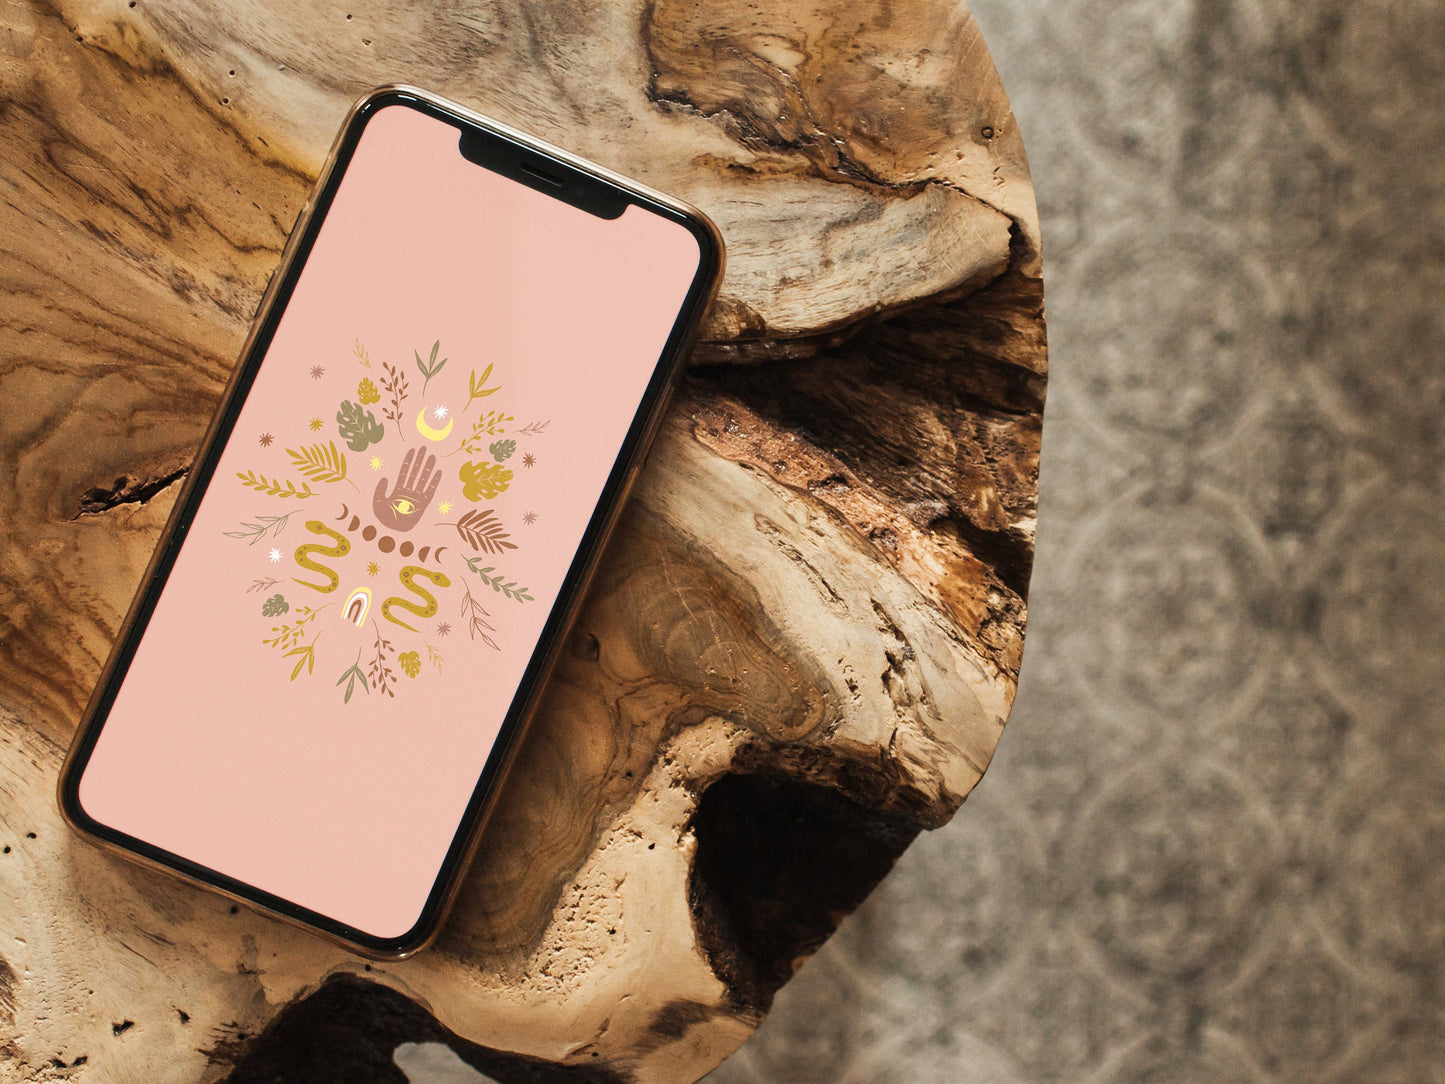 Phone Wallpaper - Boho Magic Aesthetic - Pink